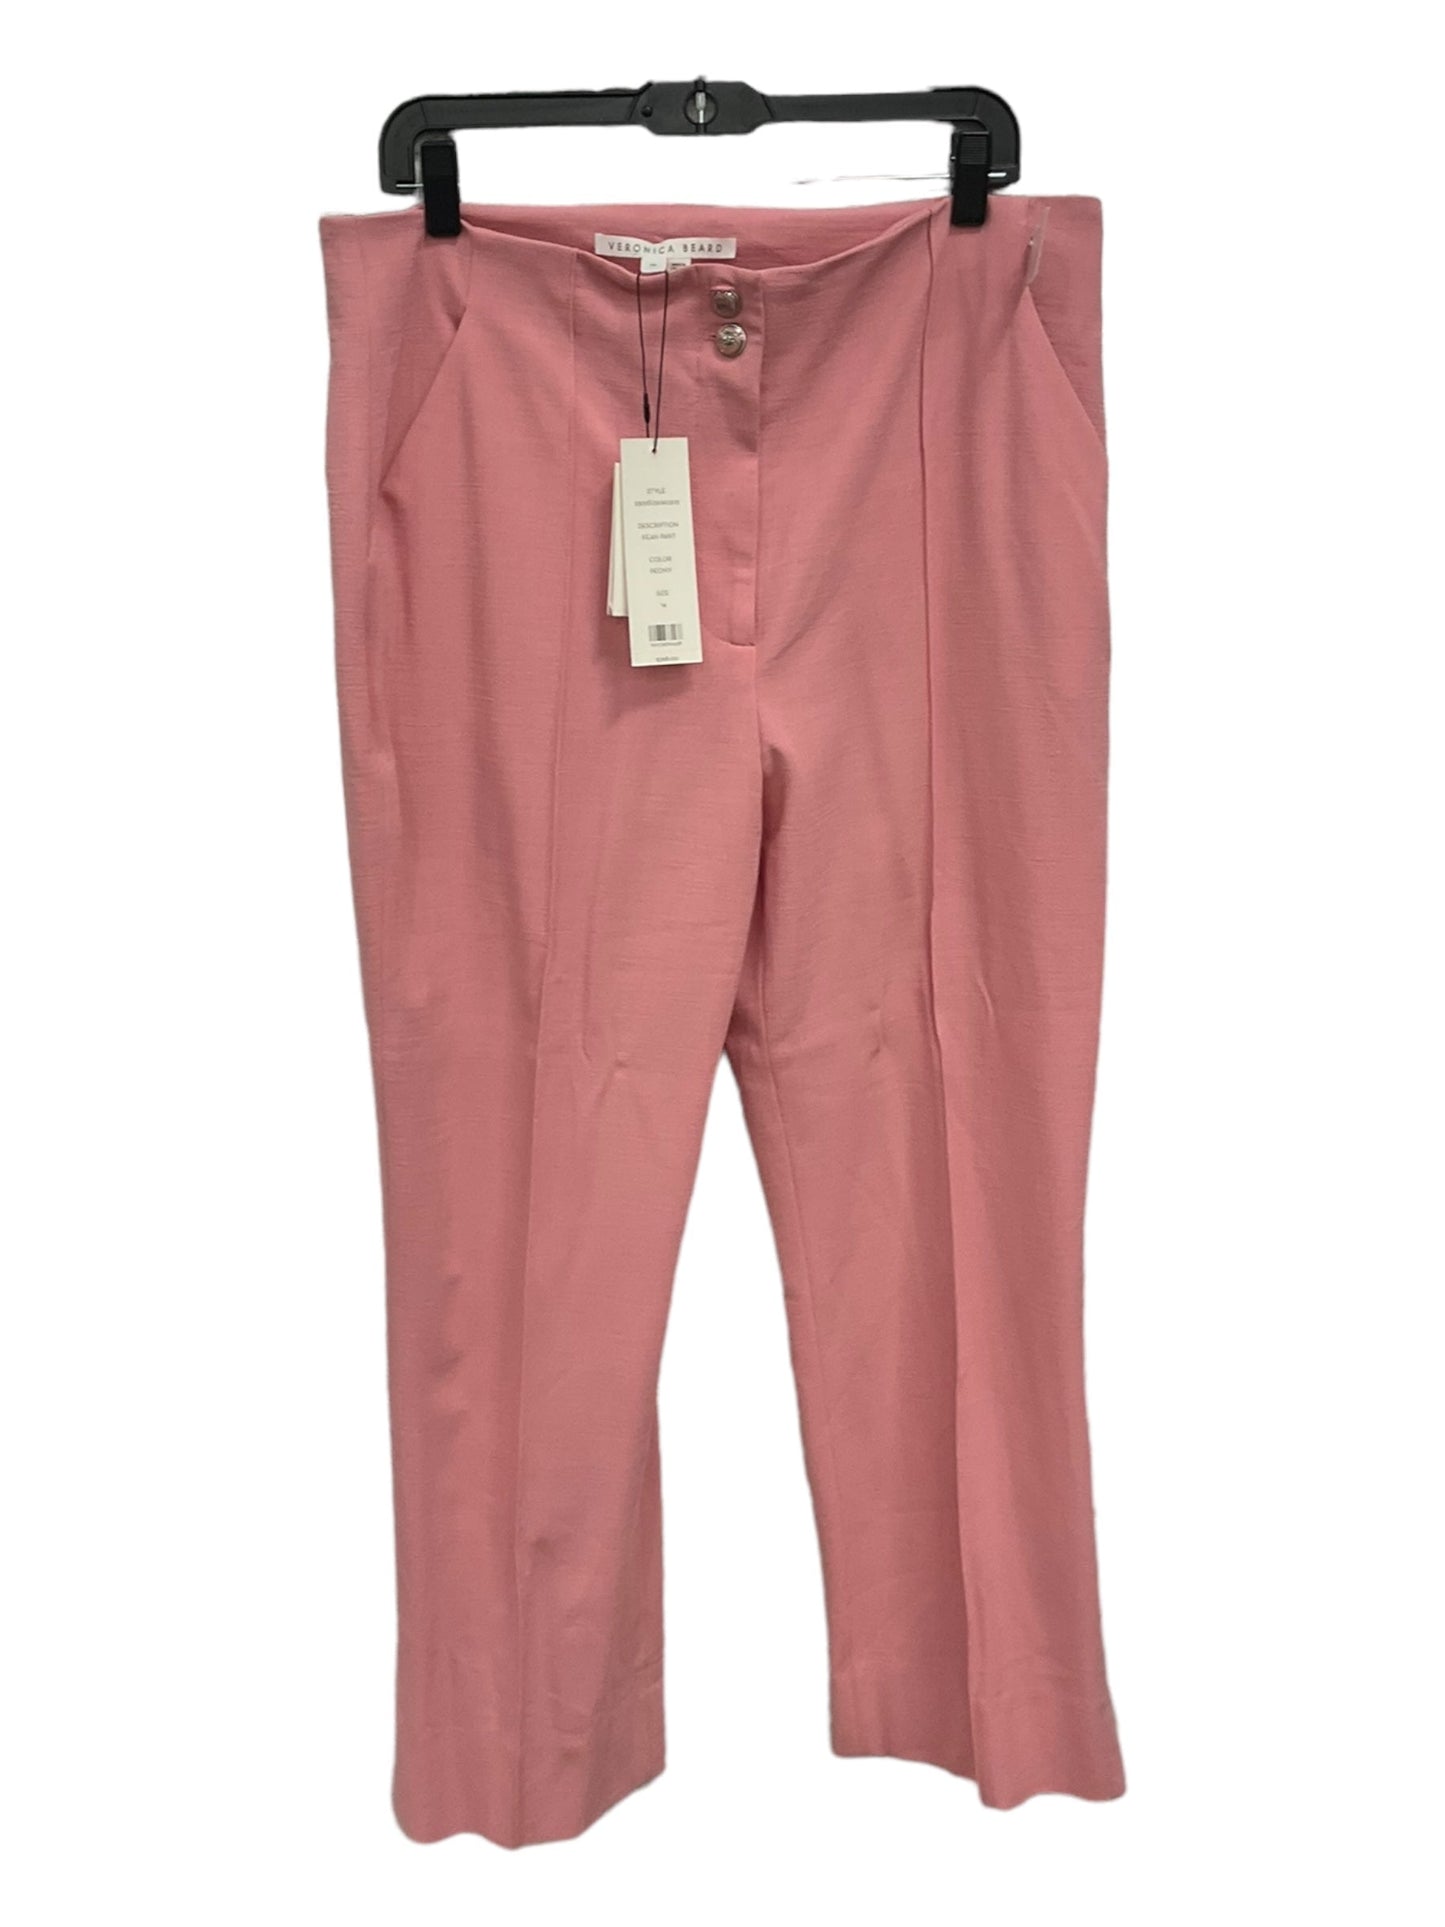 Pink Pants Dress Veronica Beard, Size 14